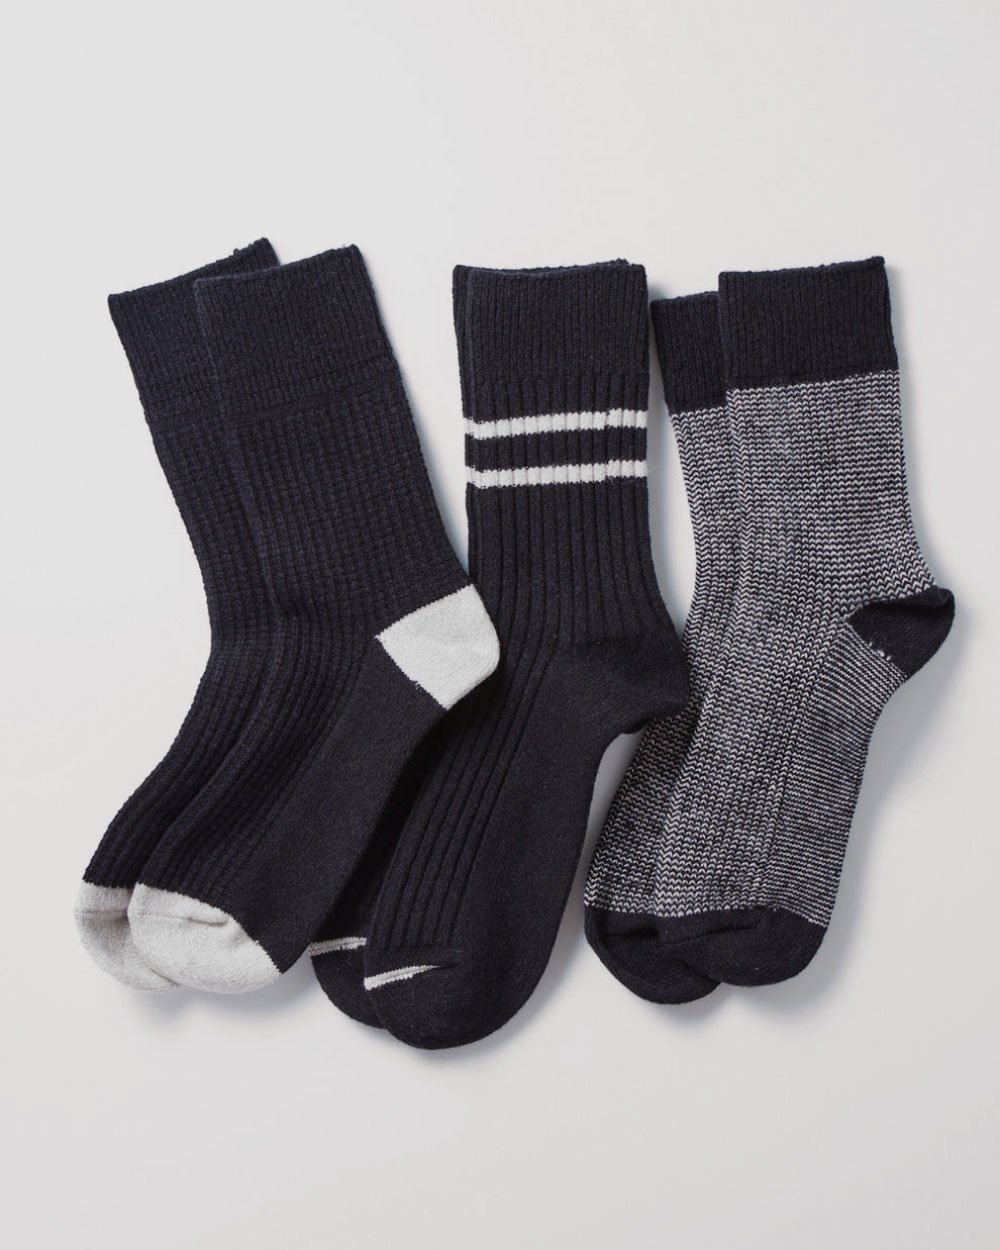 RoToTo Wool Daily 3 Pack Socks - Black/Gray